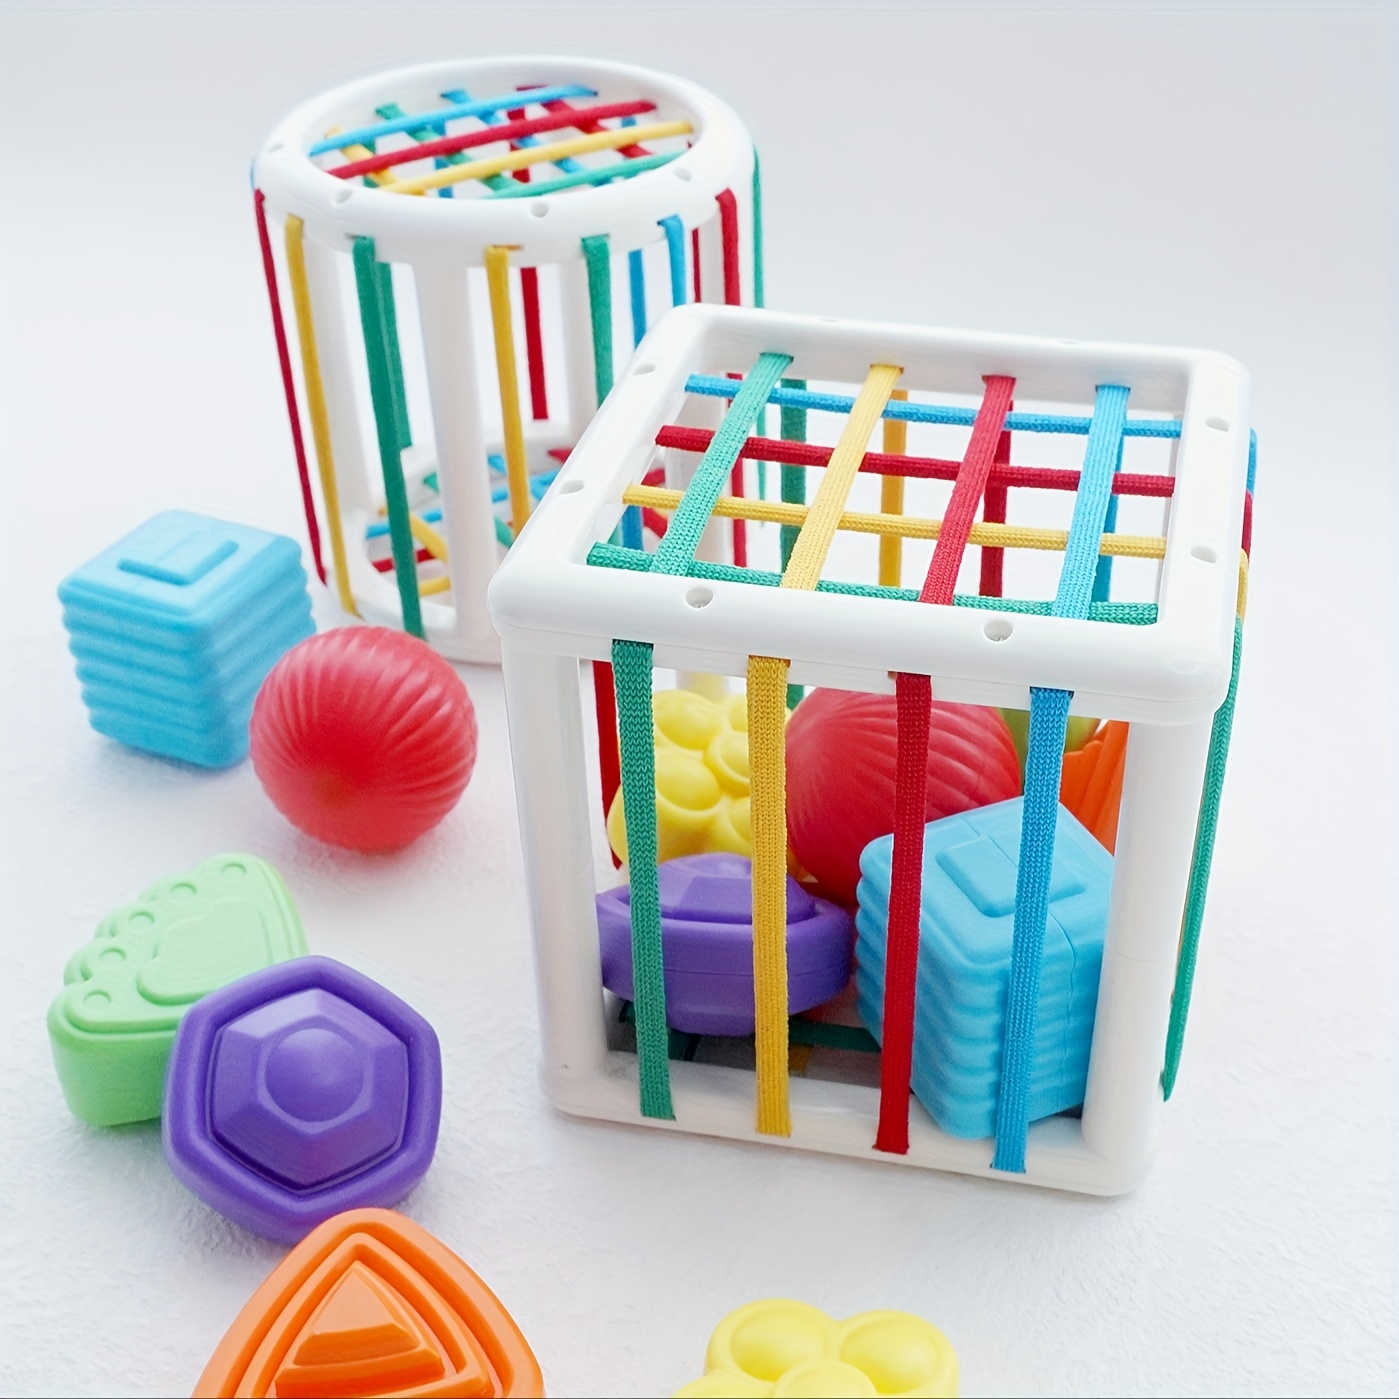 Juguetes sensoriales Montessori para niños de 1 año, juguetes de